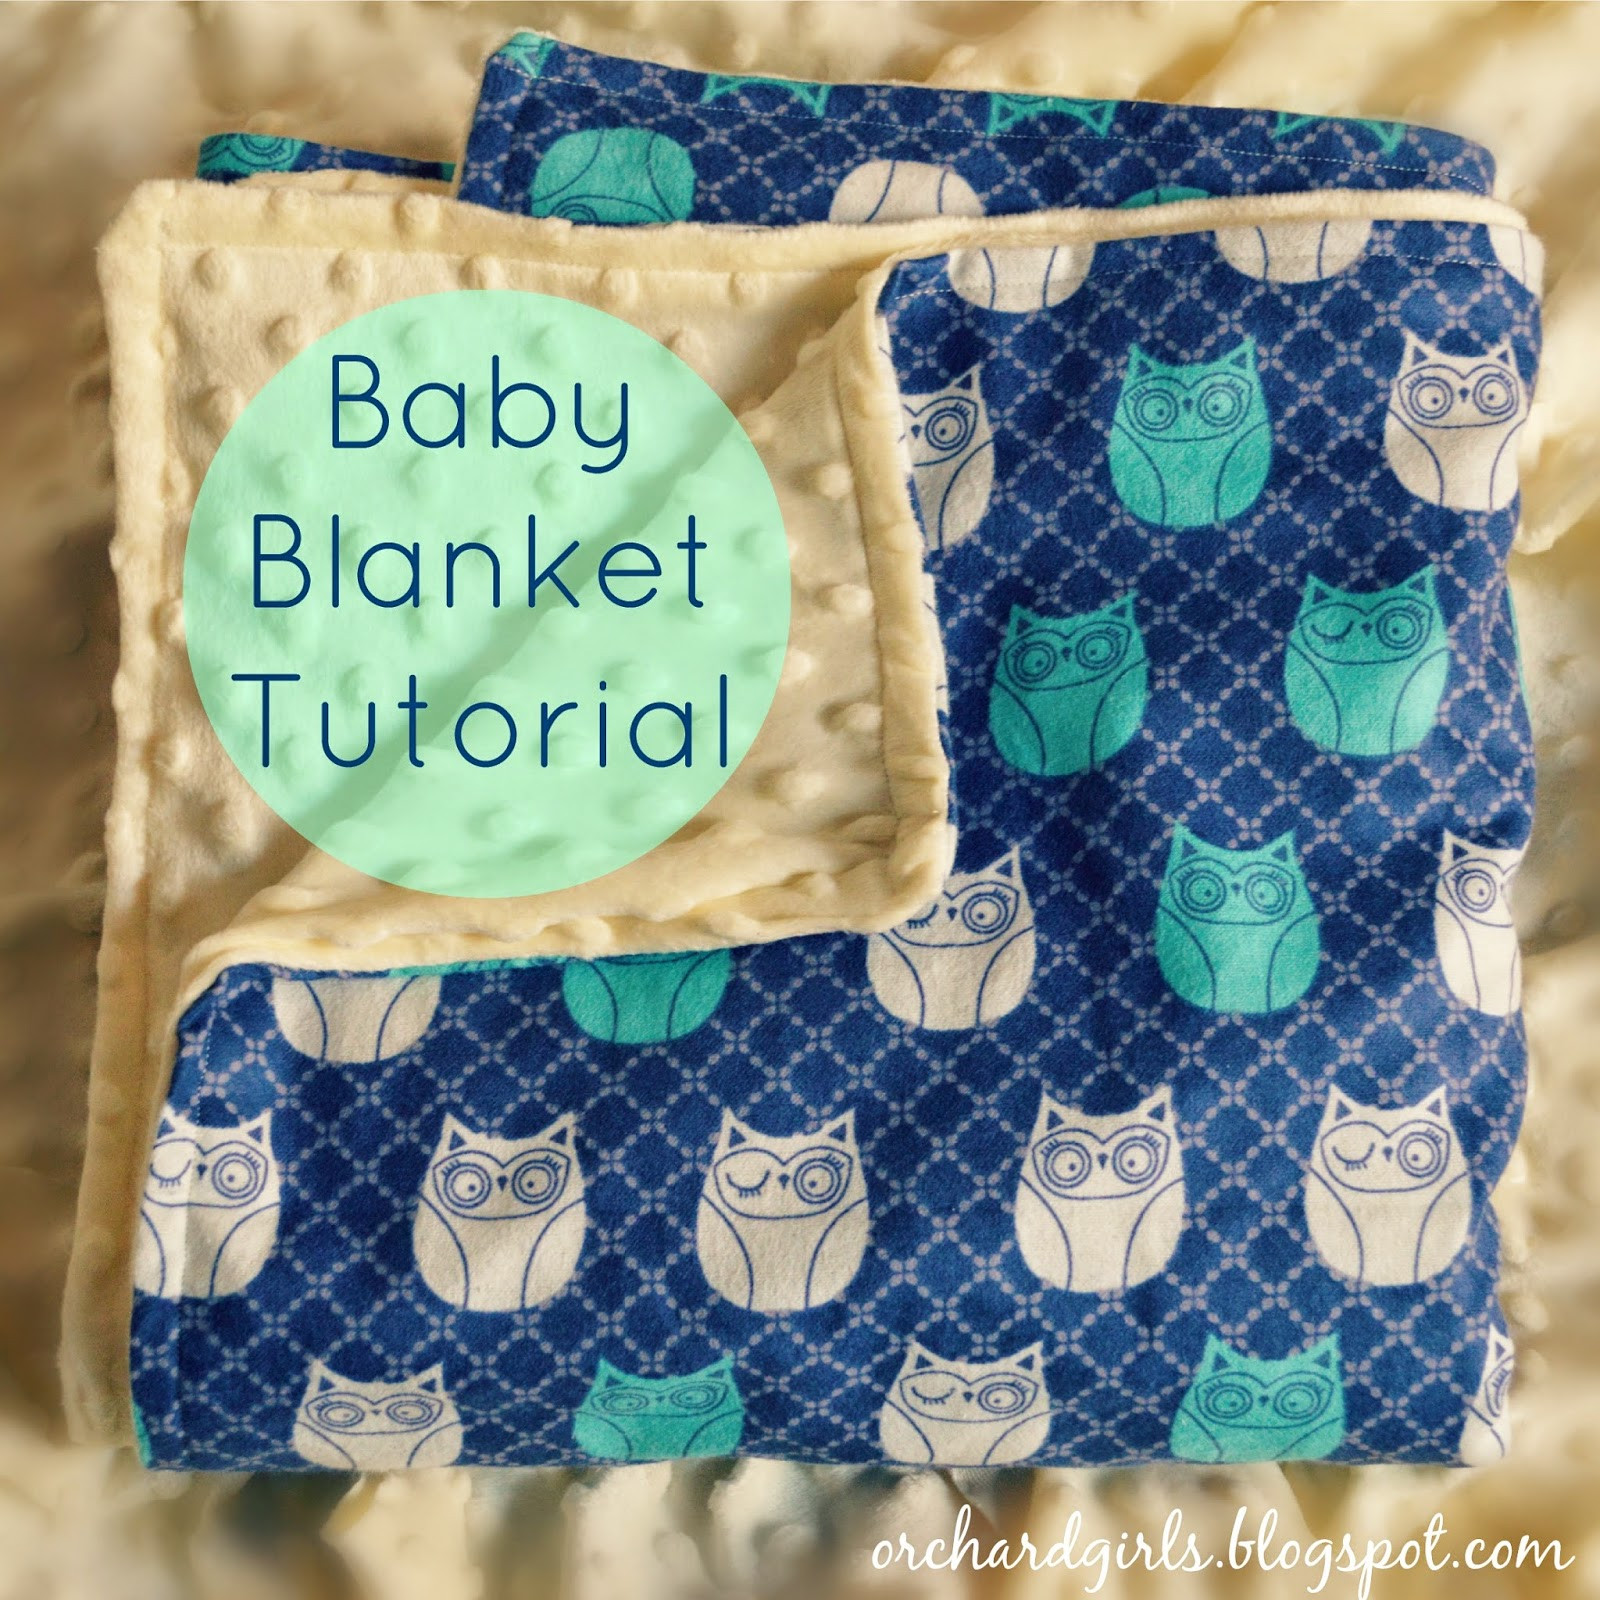 Diy Baby Blankets
 Orchard Girls Super easy DIY Baby Blanket Tutorial with